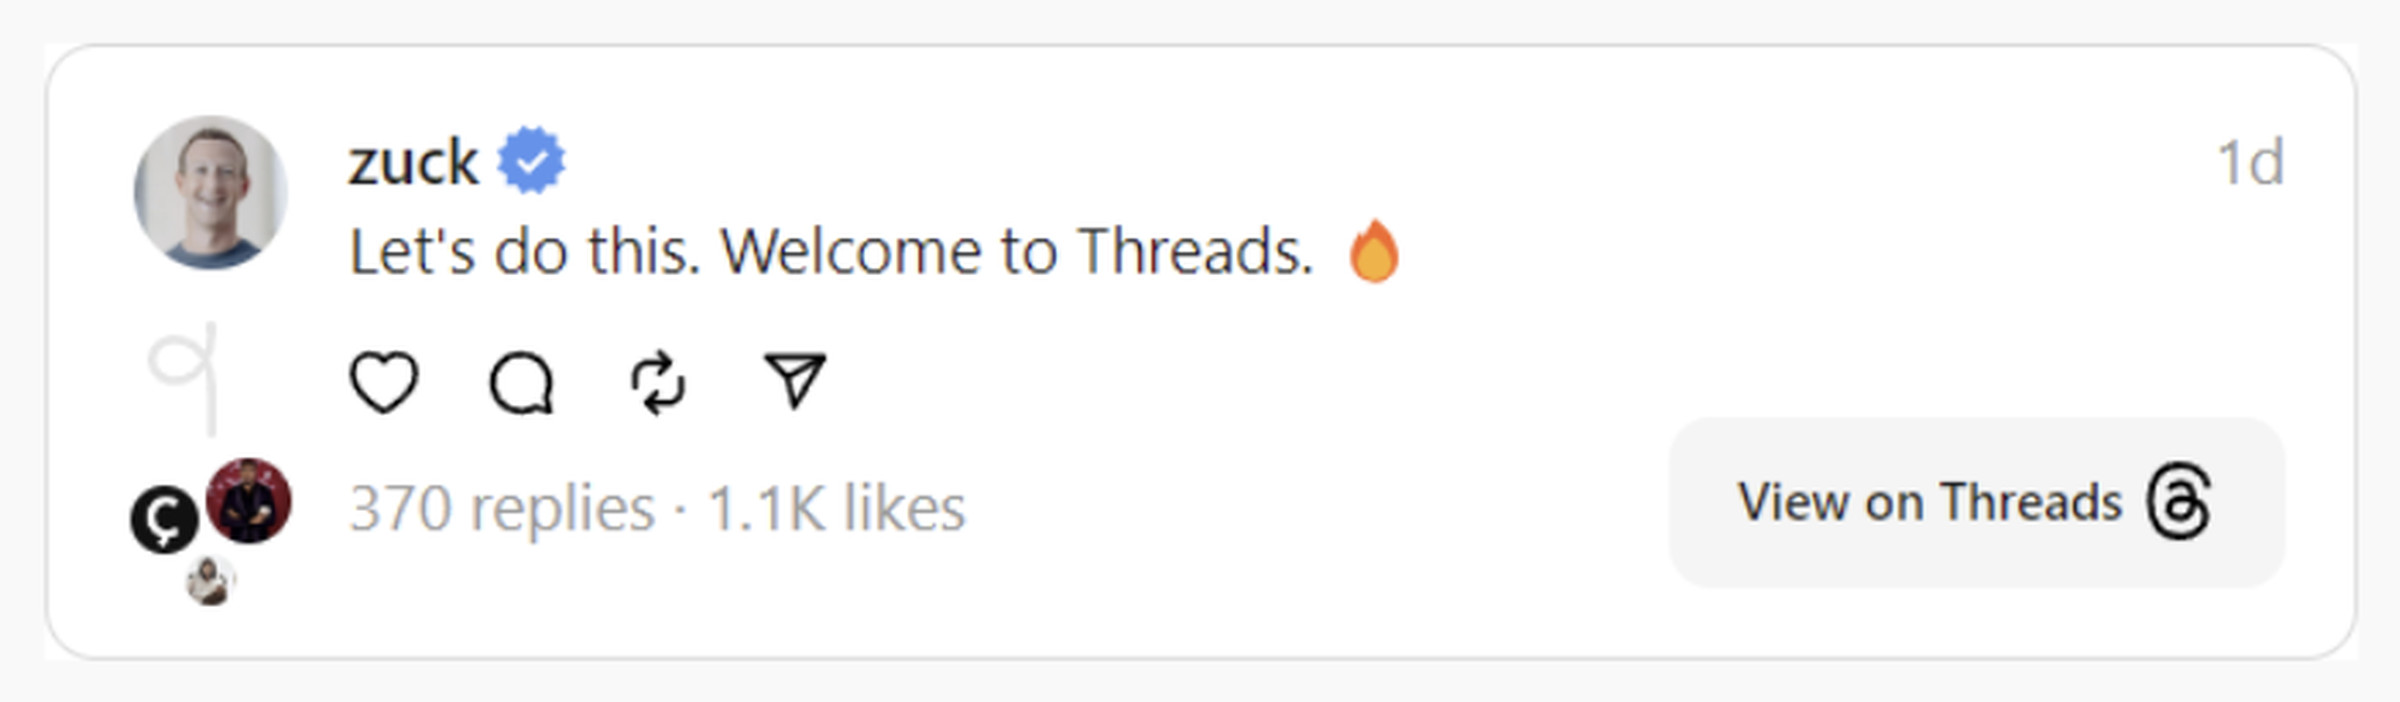 Mark Zuckerberg’s first post on Threads.